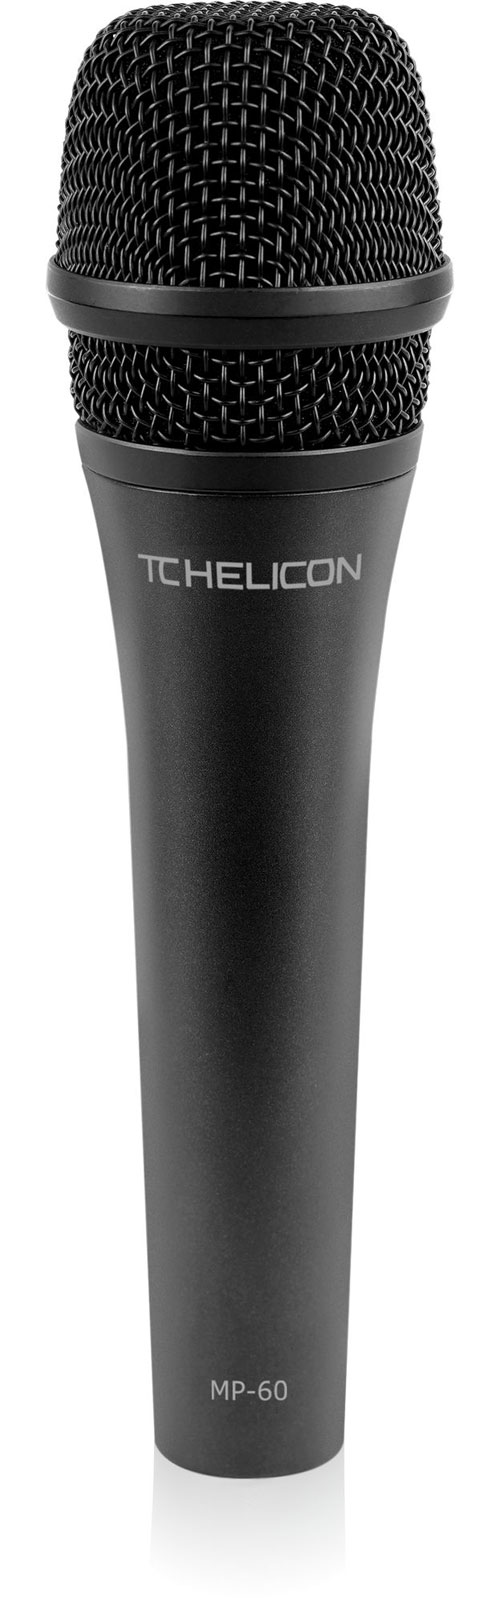 TC HELICON MP-60 - MICRO CHANT